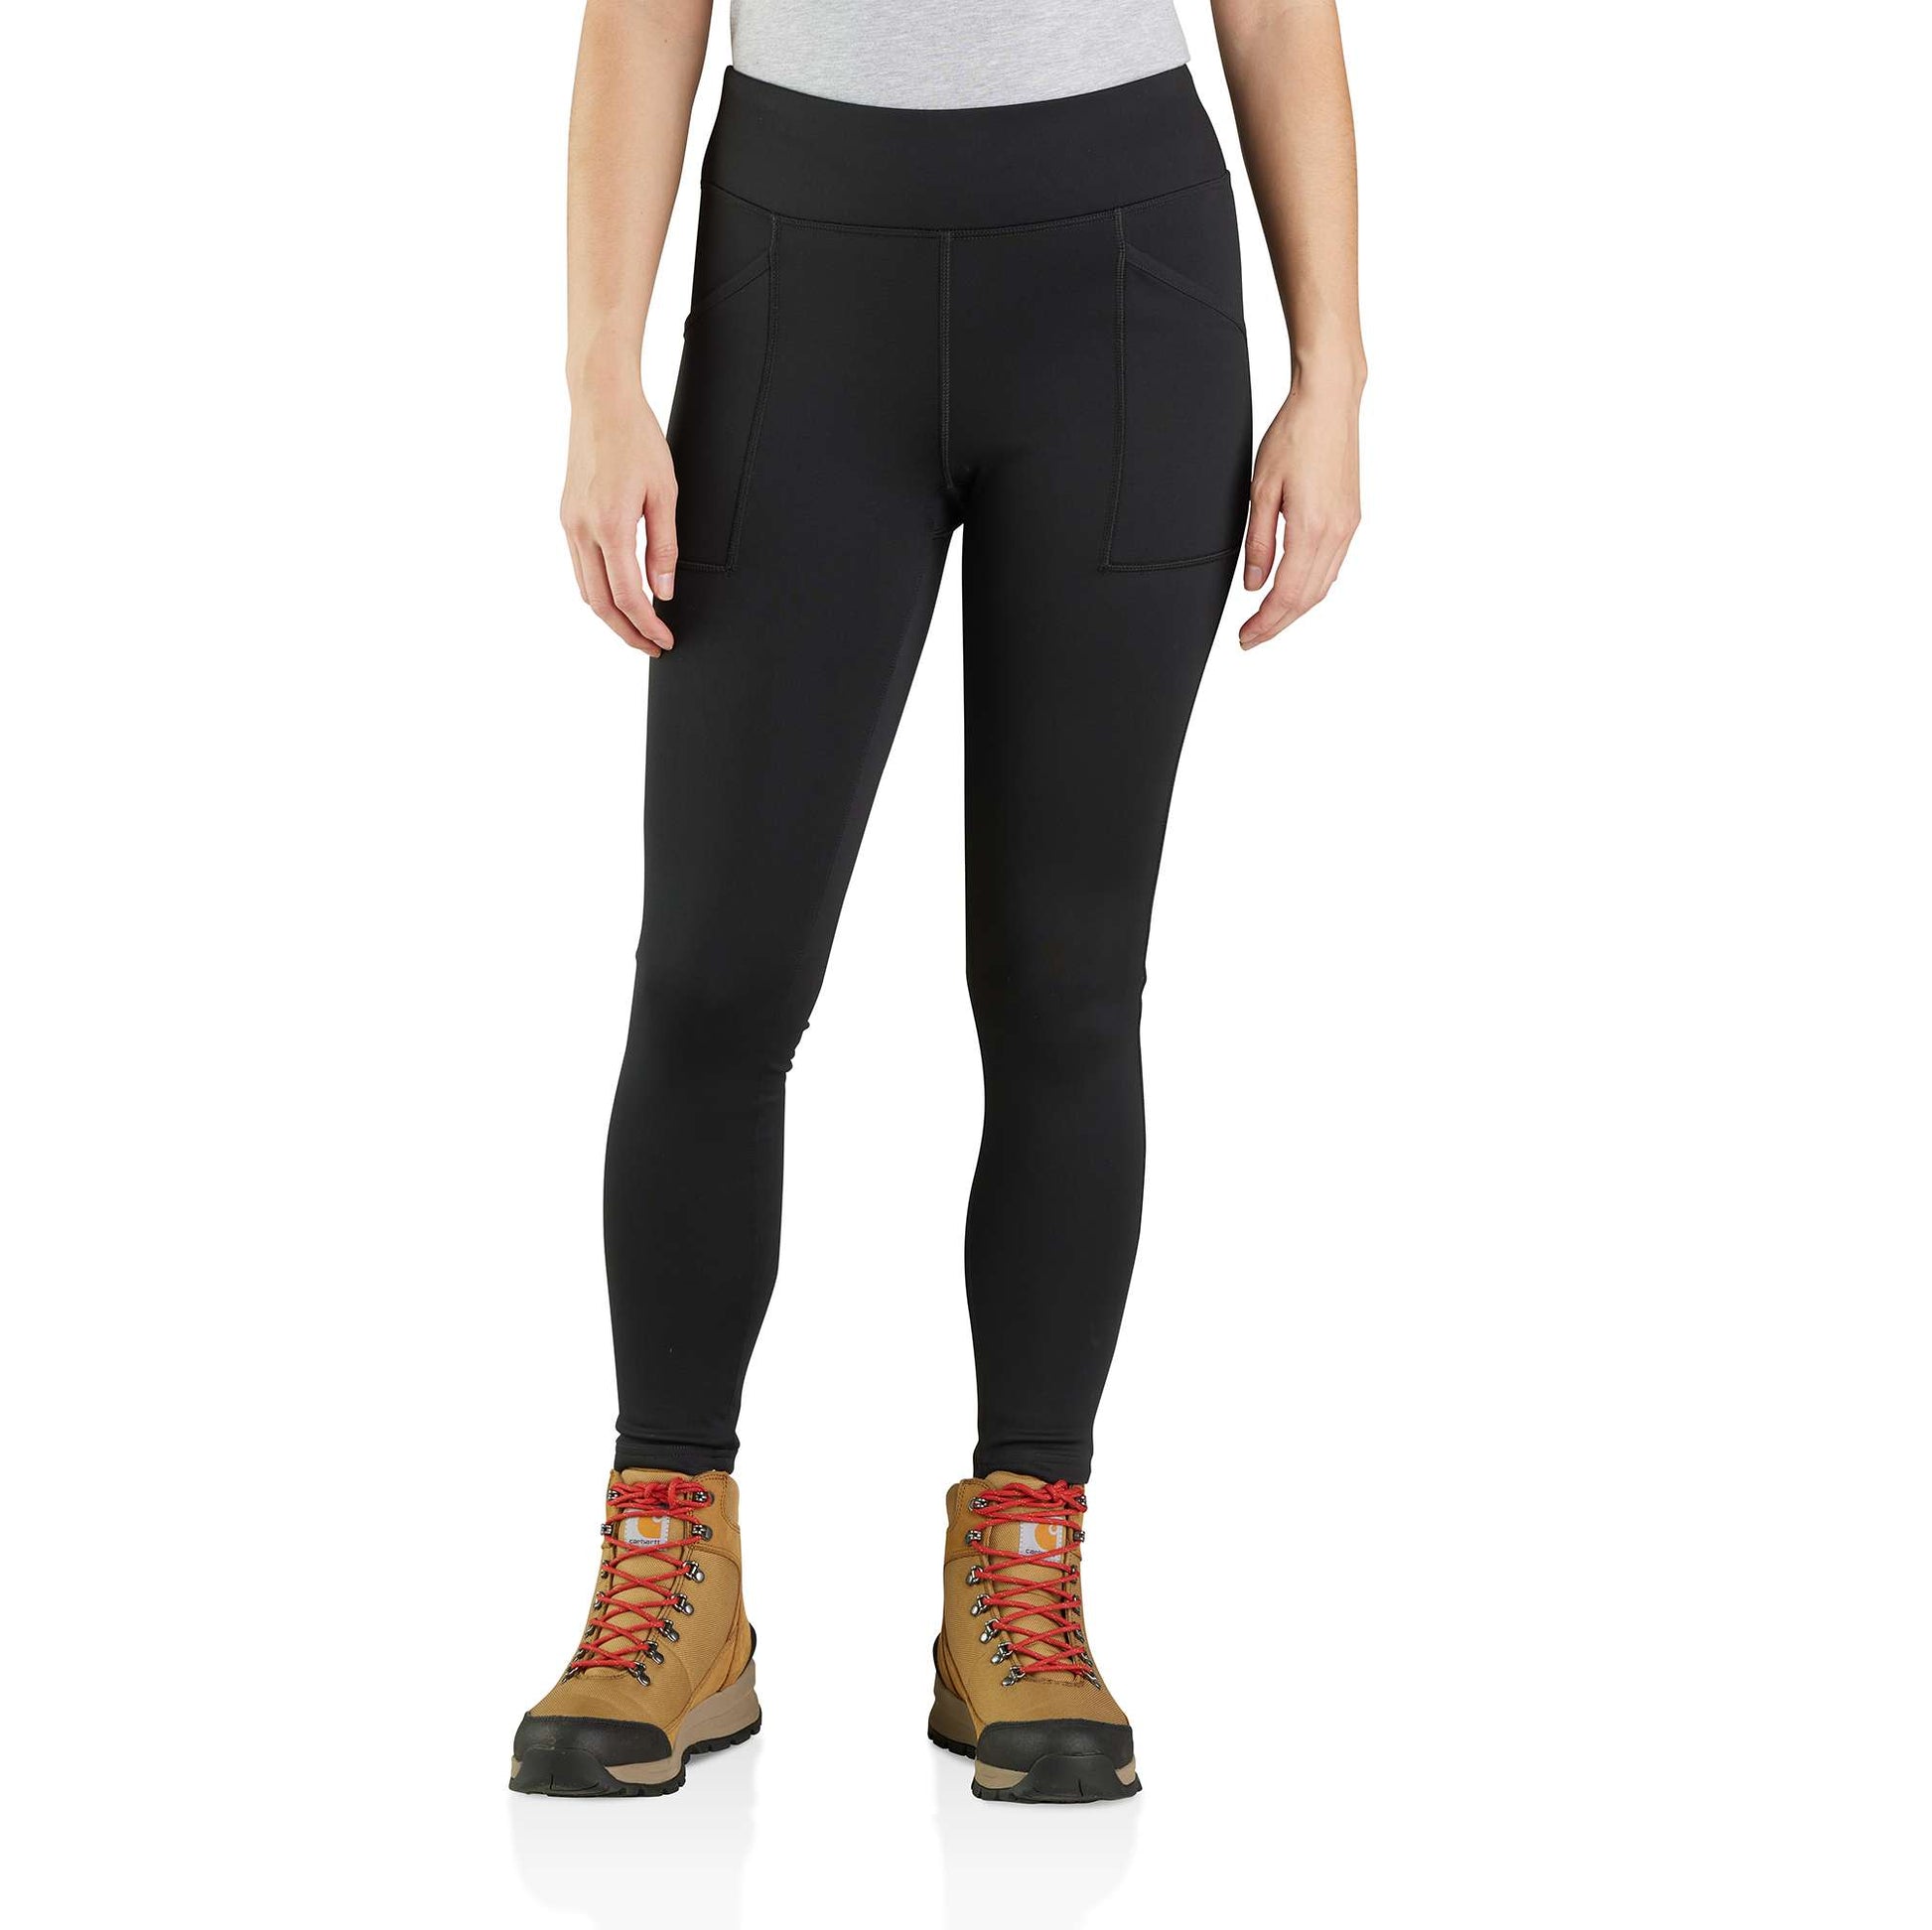 Carhartt Women's Force® Fitted Lightweight Utility Legging